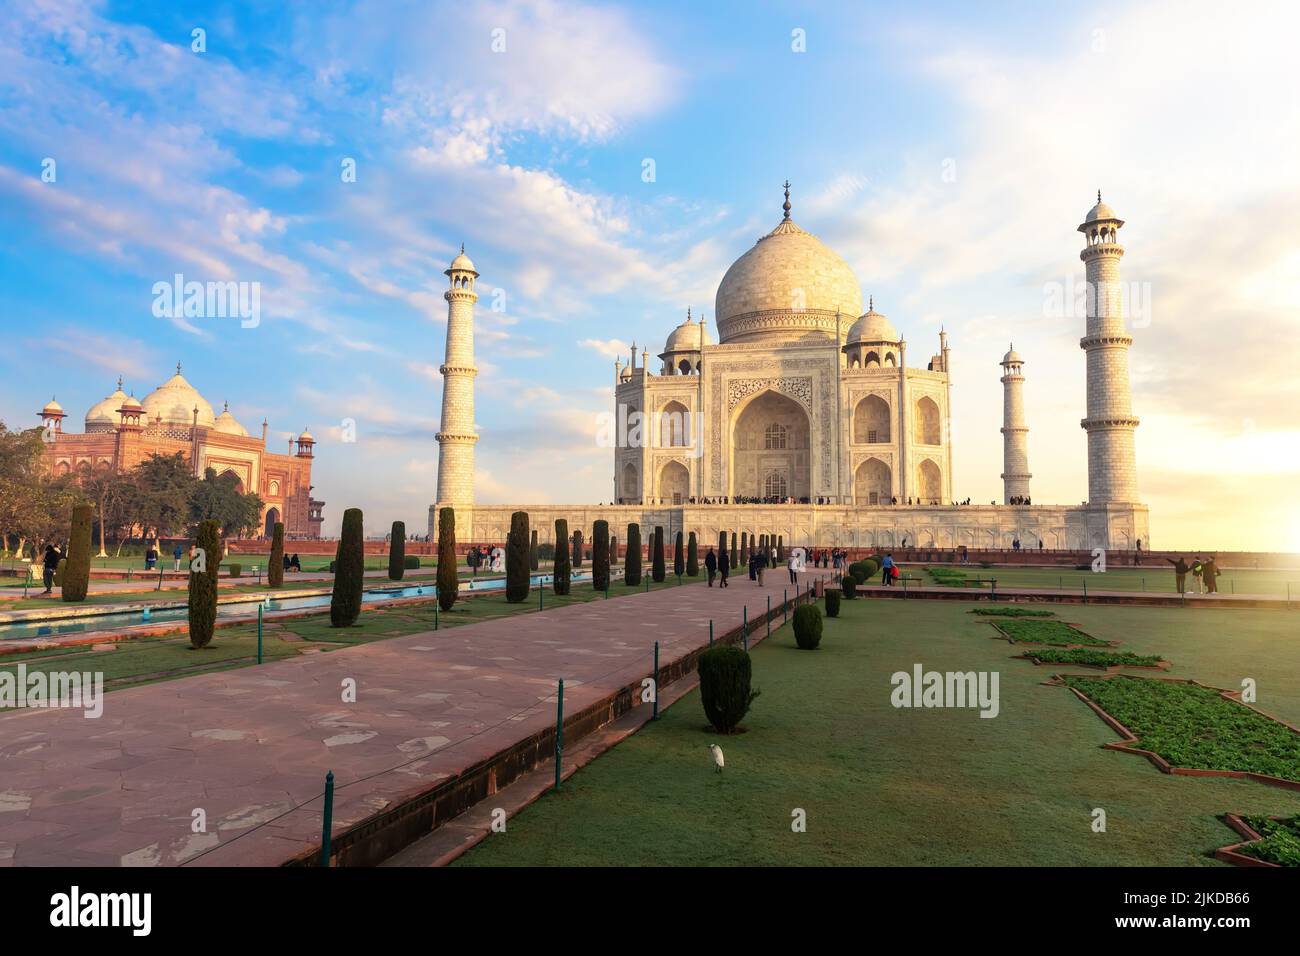 Taj Mahal in India, the main place of visit. Stock Photo